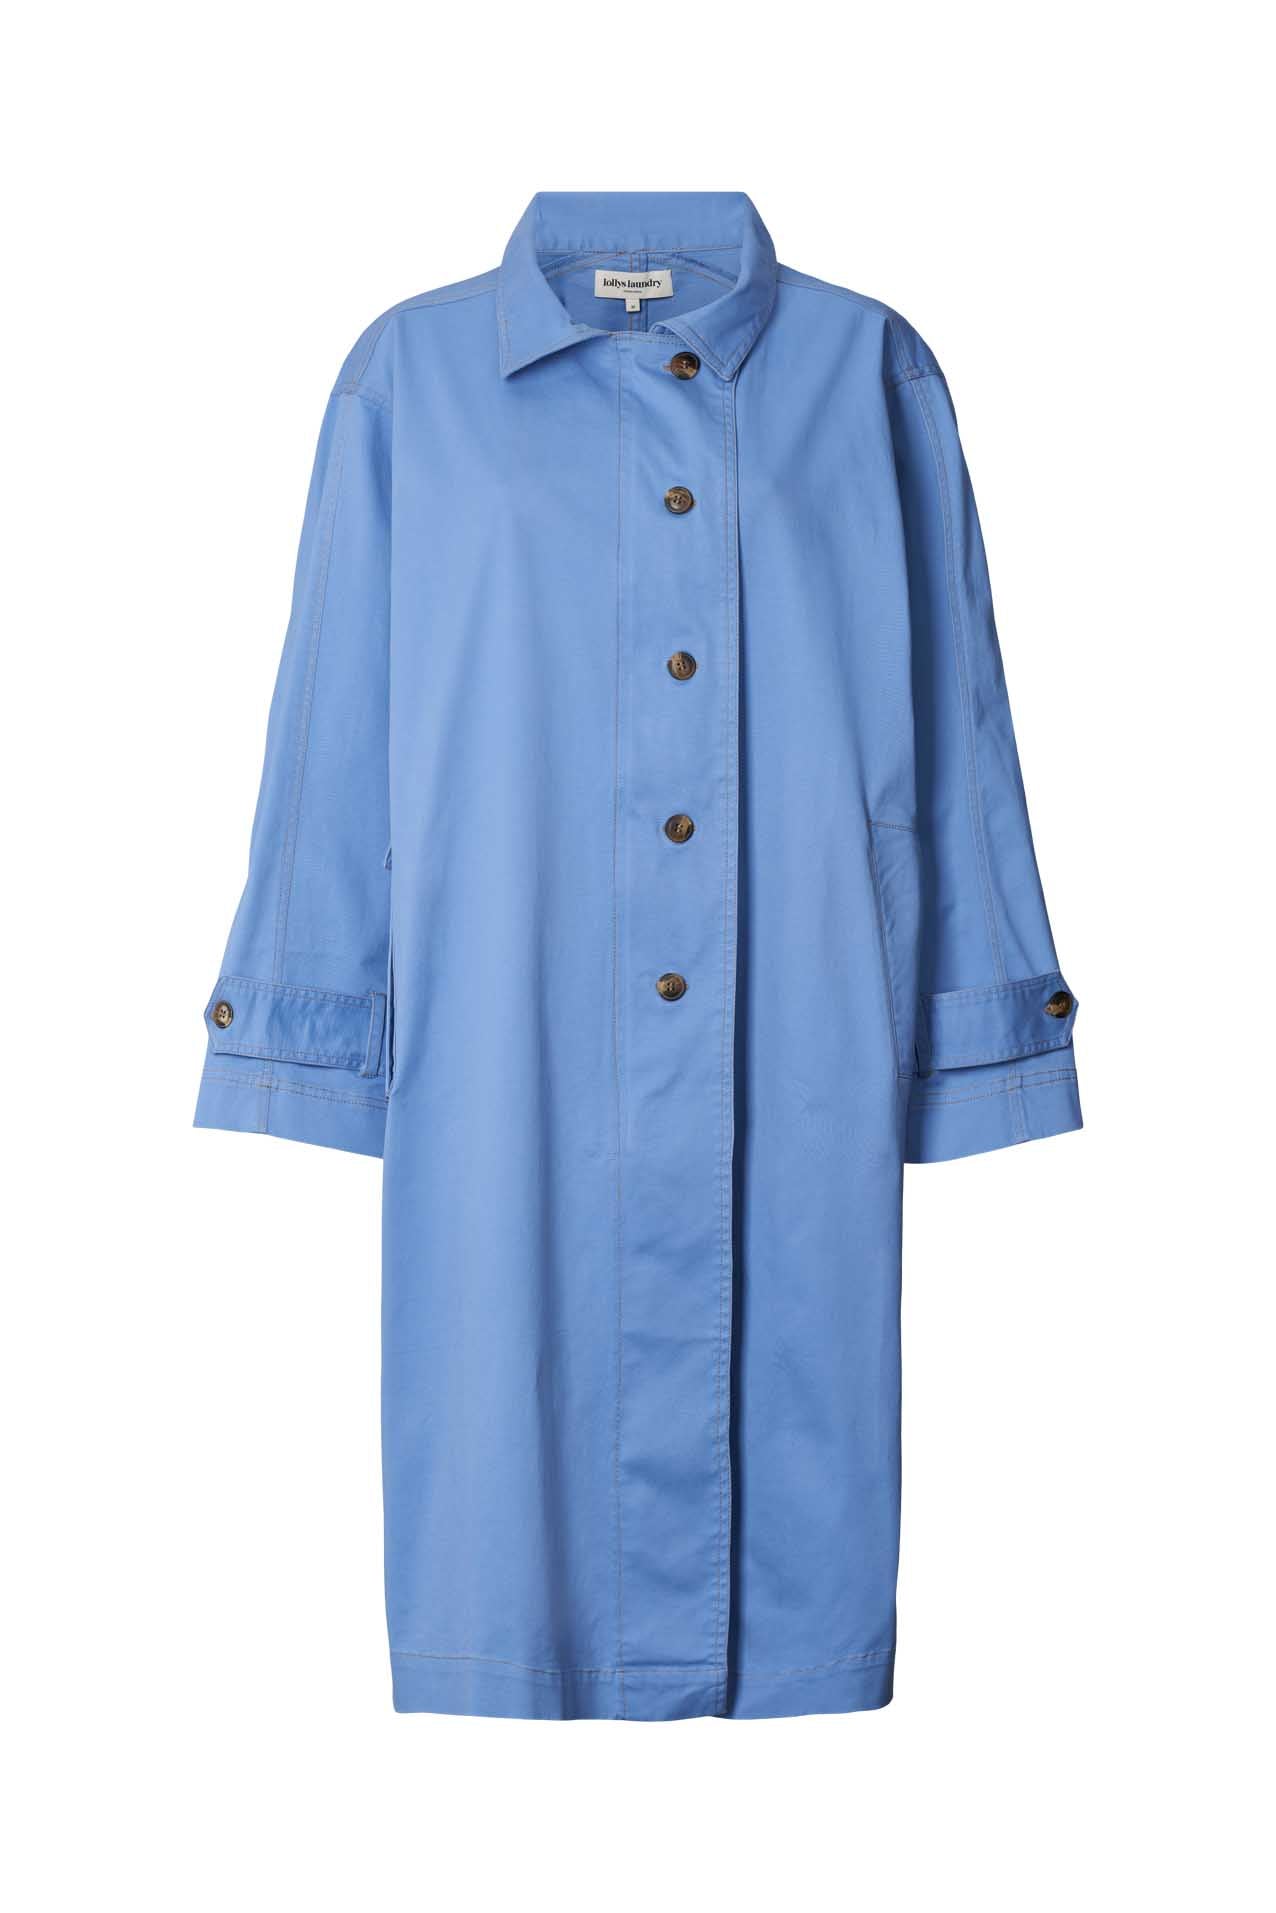 Lollys Laundry Russi Coat Jacket 22 Light Blue